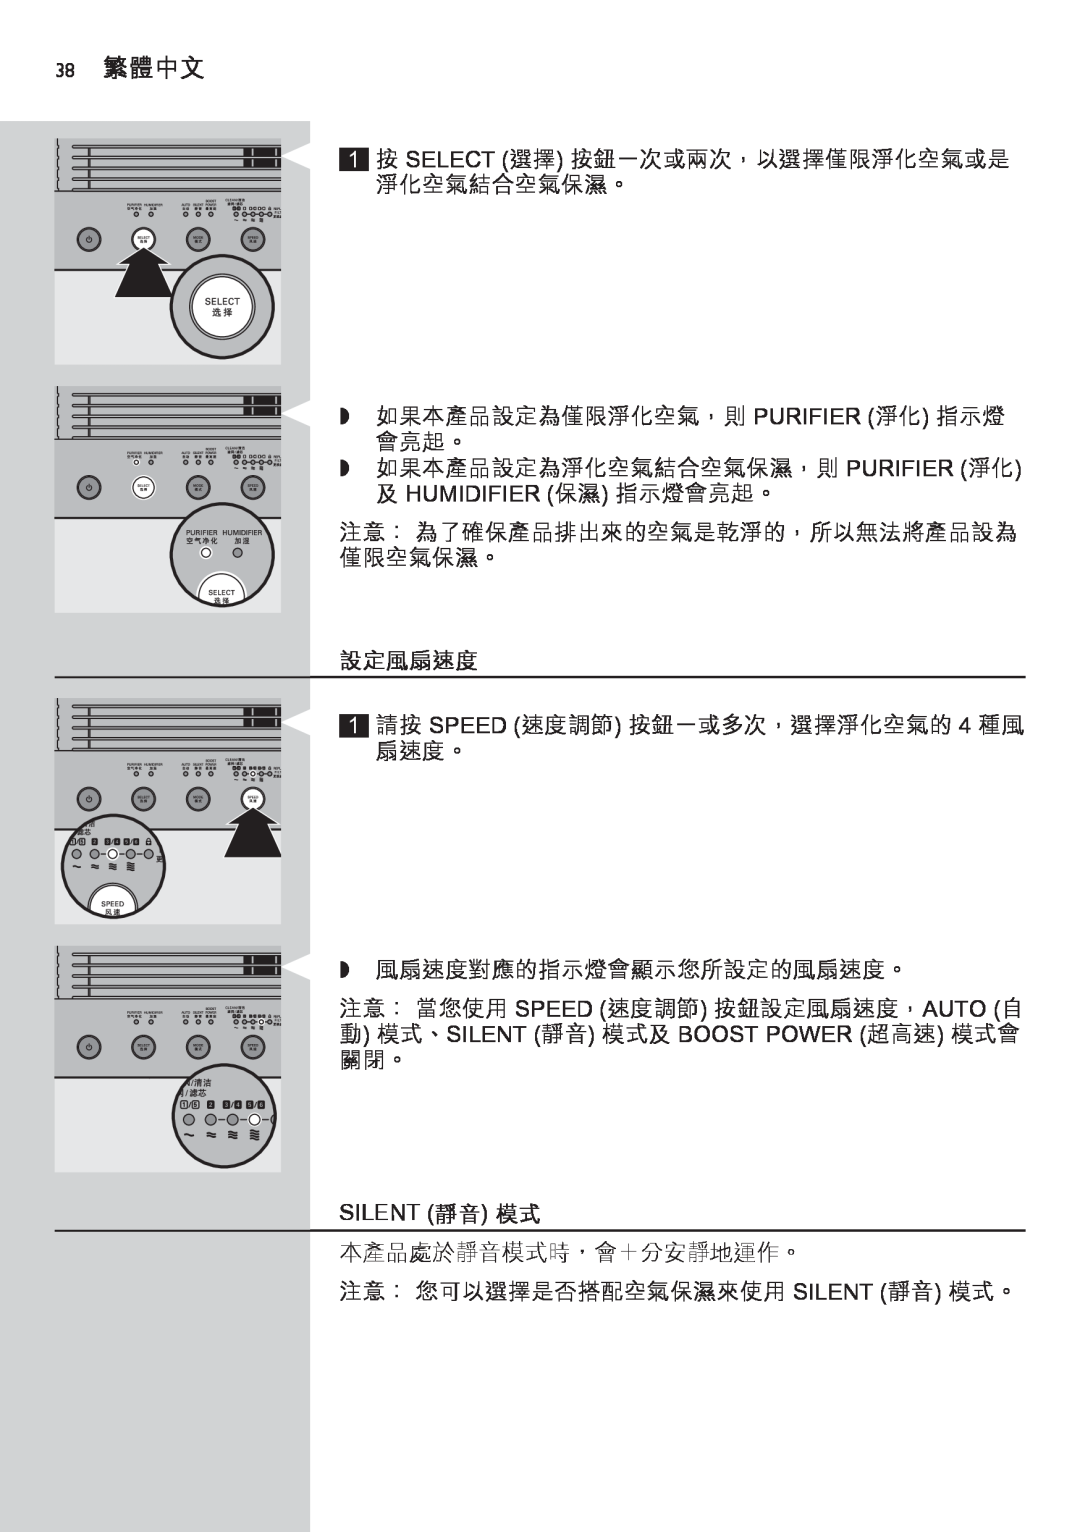 Philips AC4083 manual 38繁體中文, 設定風扇速度, Silent 靜音 模式 